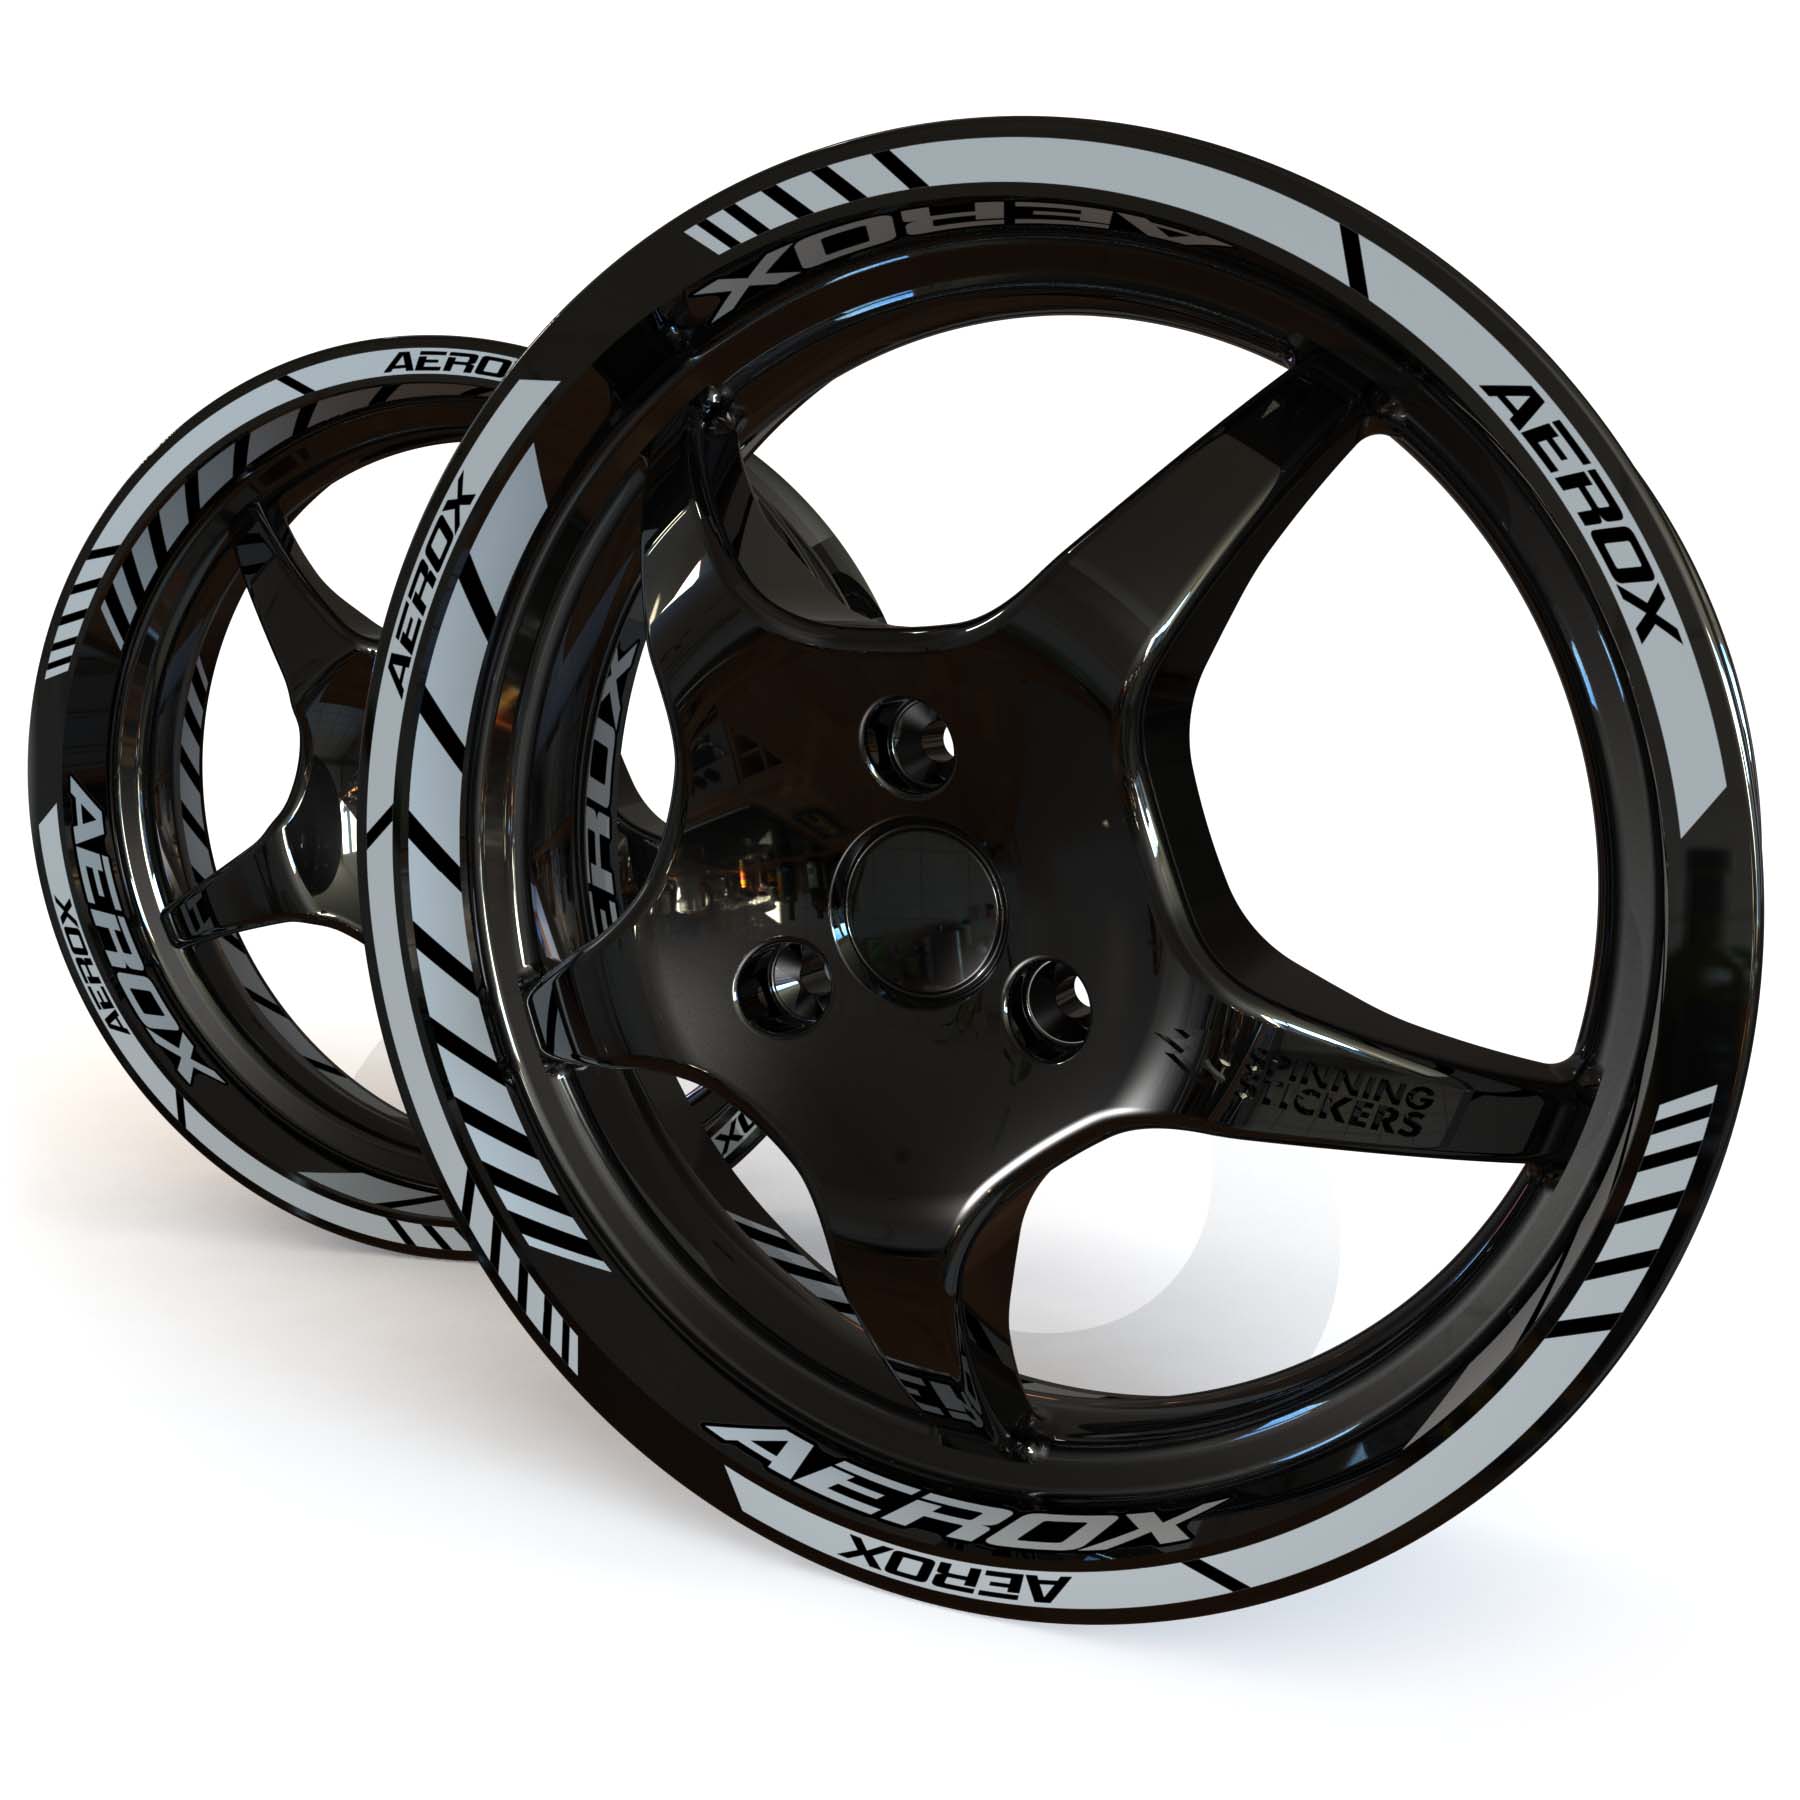 Gray Yamaha Aerox wheel stickers on a black 12 inch moped rim